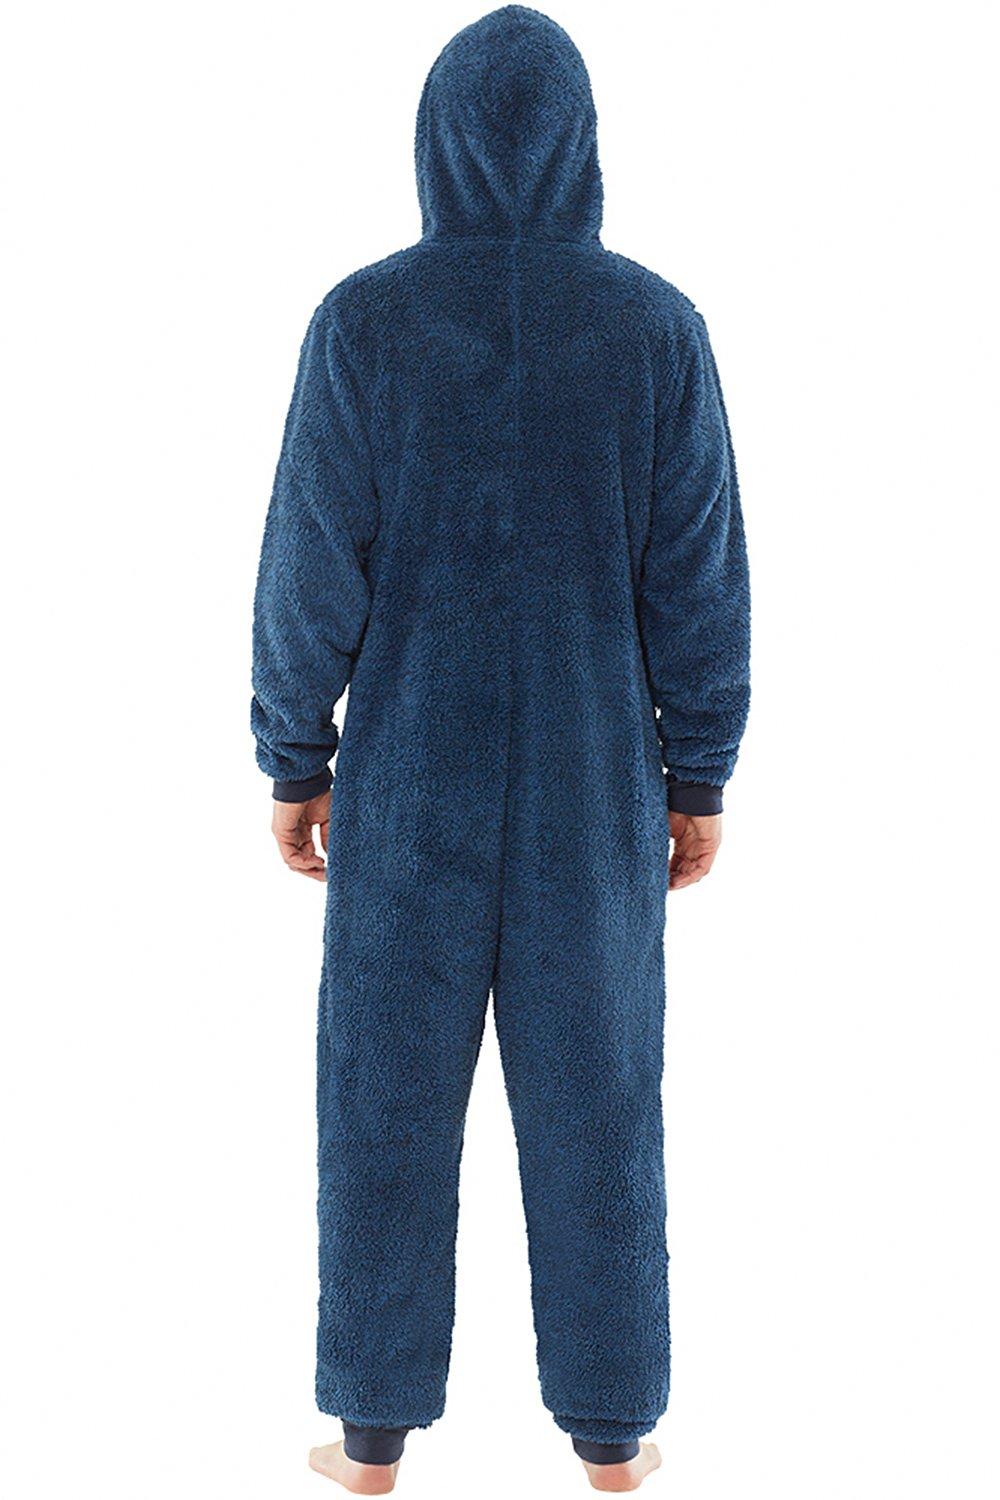 Men's Back-Zip Sleeper Suit Adaptive Clothing for Seniors, Disabled &  Elderly Care